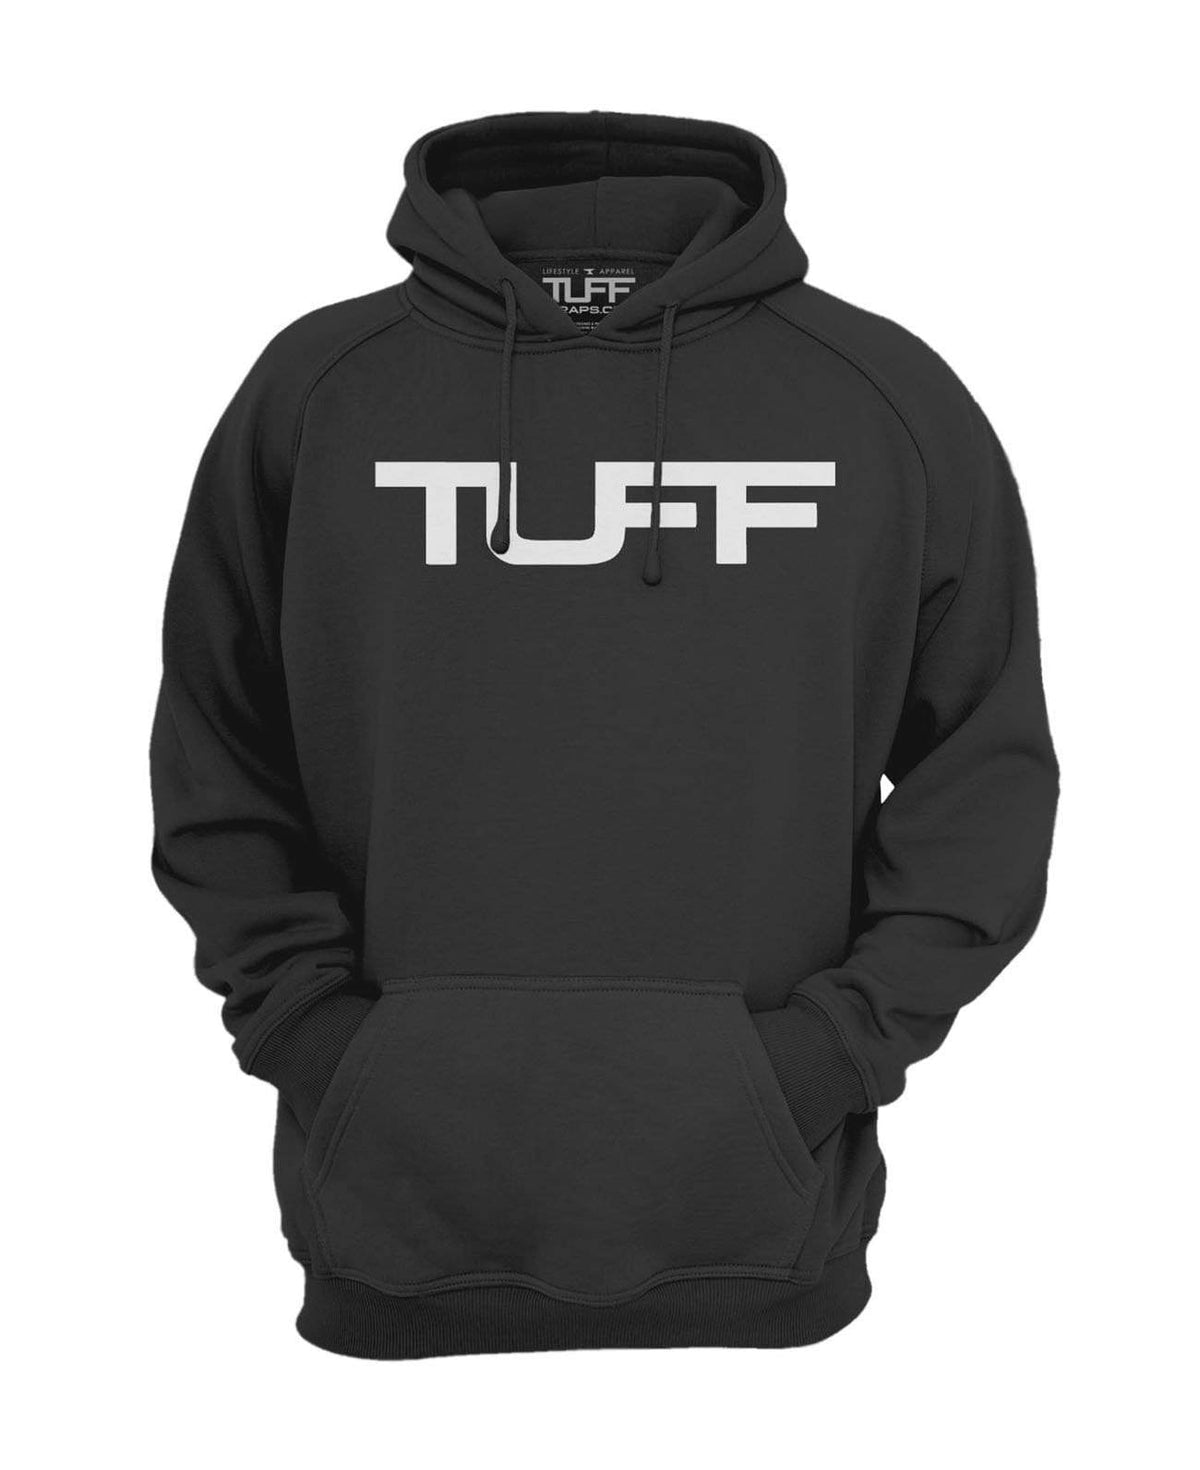 TUFF Apocalyptic Hooded Sweatshirt S / Black w/White TuffWraps.com